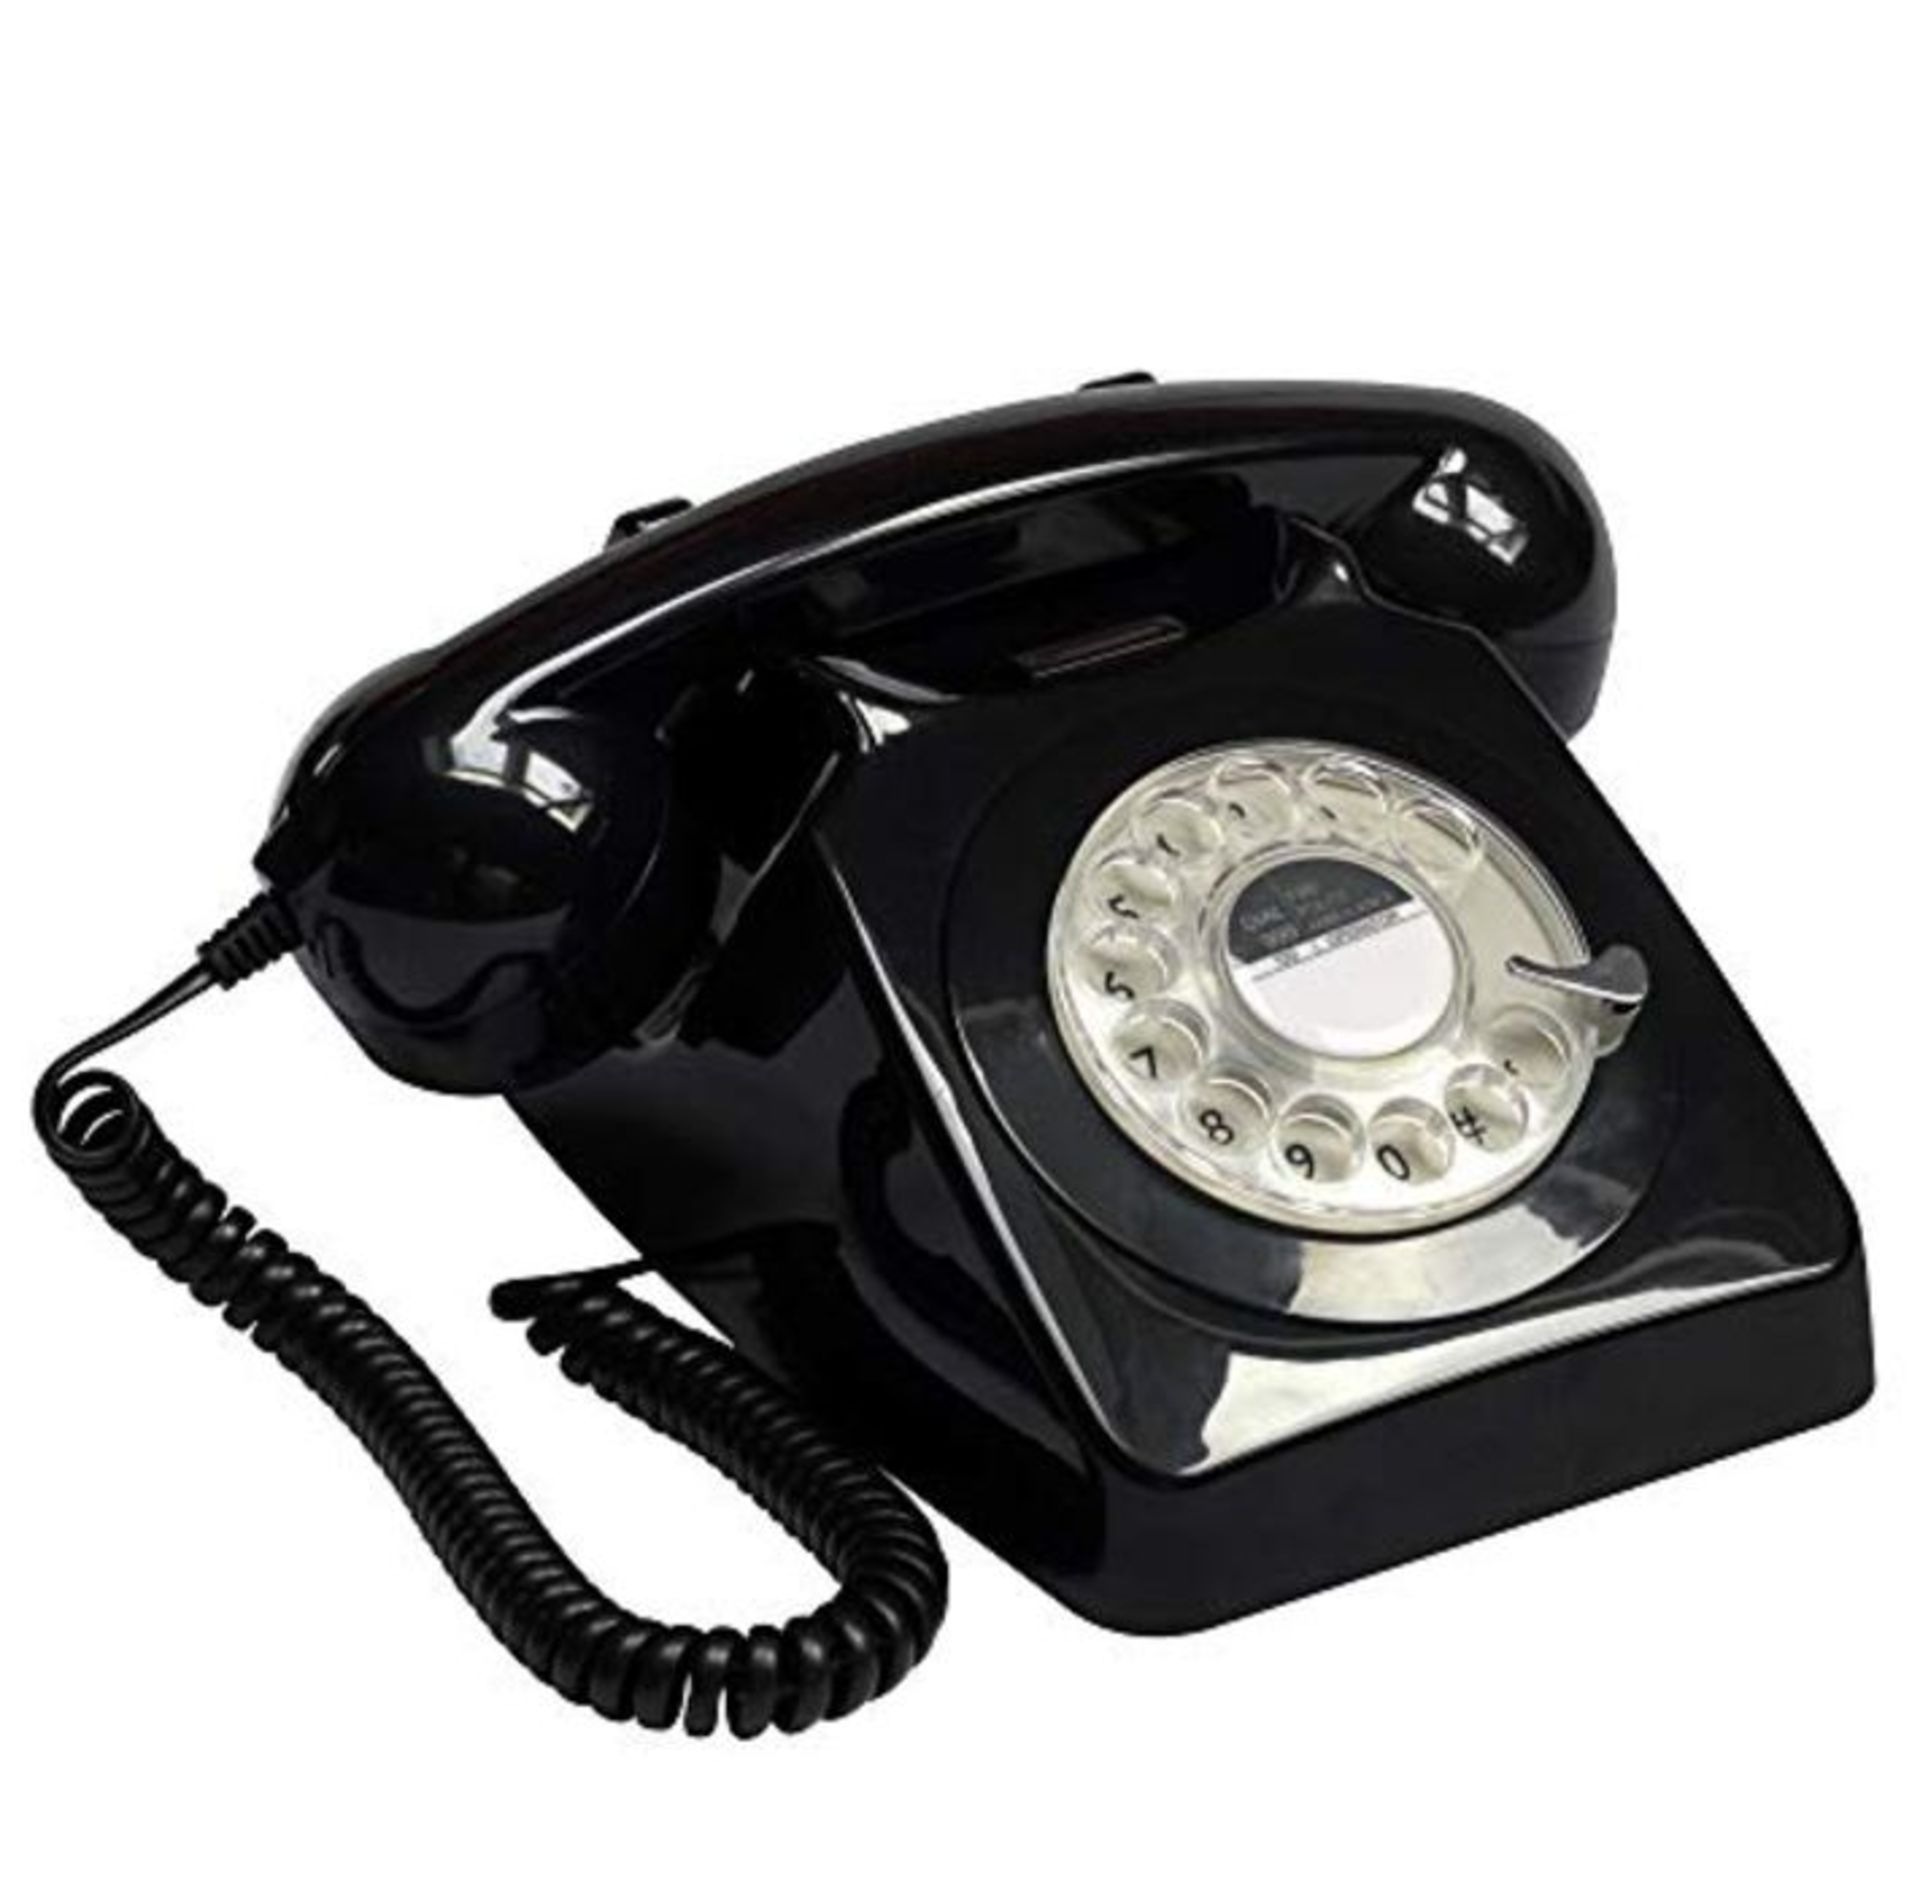 RRP £52.00 GPO 746 Rotary 1970s-Style Retro Landline Telephone, Classic Telephone with Ringer On/